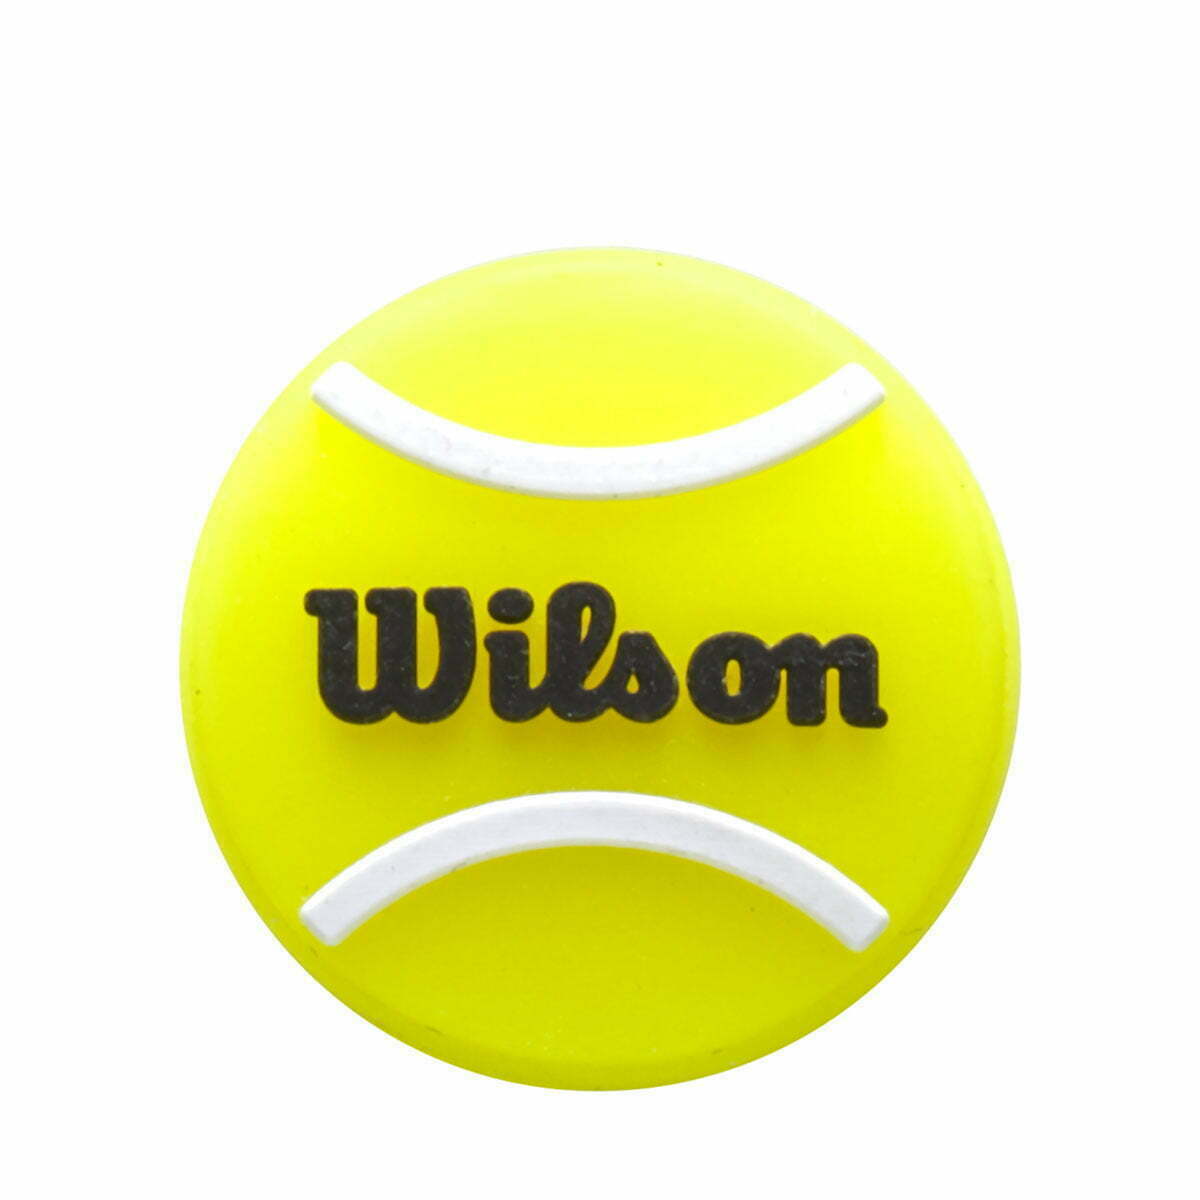 Wr8403801 2 Rg Tennis Ball Dampener Ye.png.cq5dam.web .2000.2000.jpg